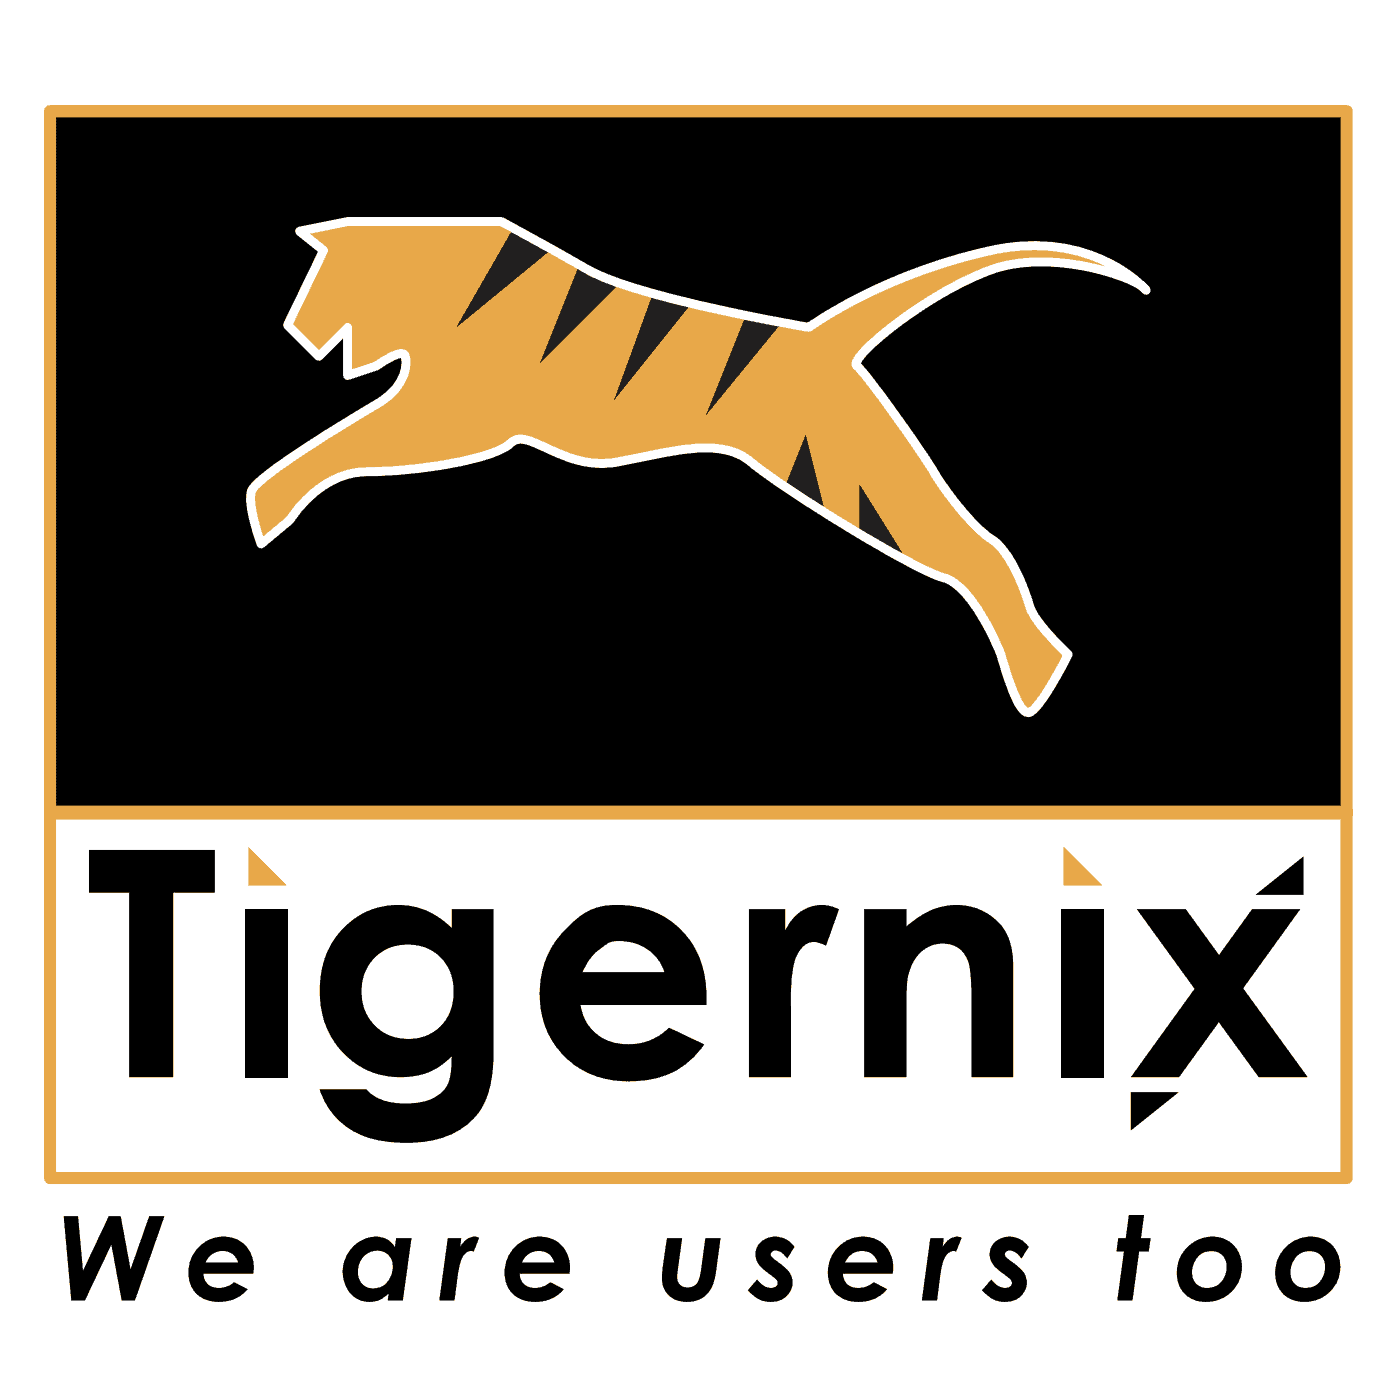 Tigernix Singapore